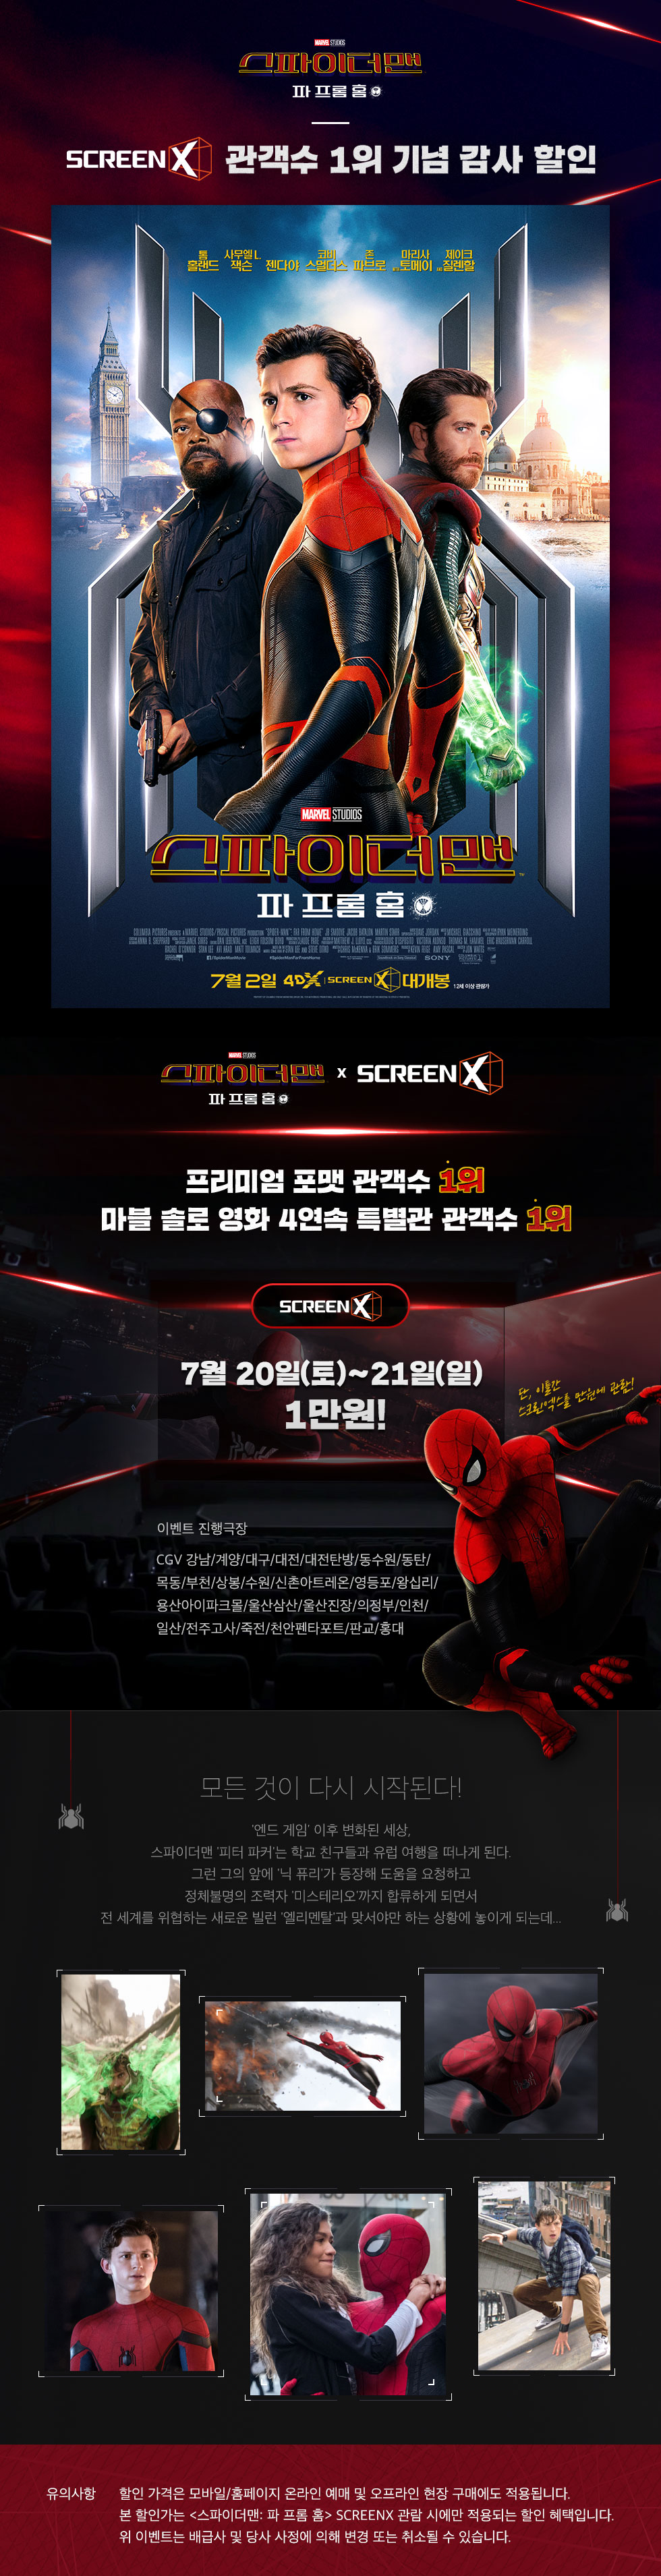 PC_spider_man_screenx_event.jpg